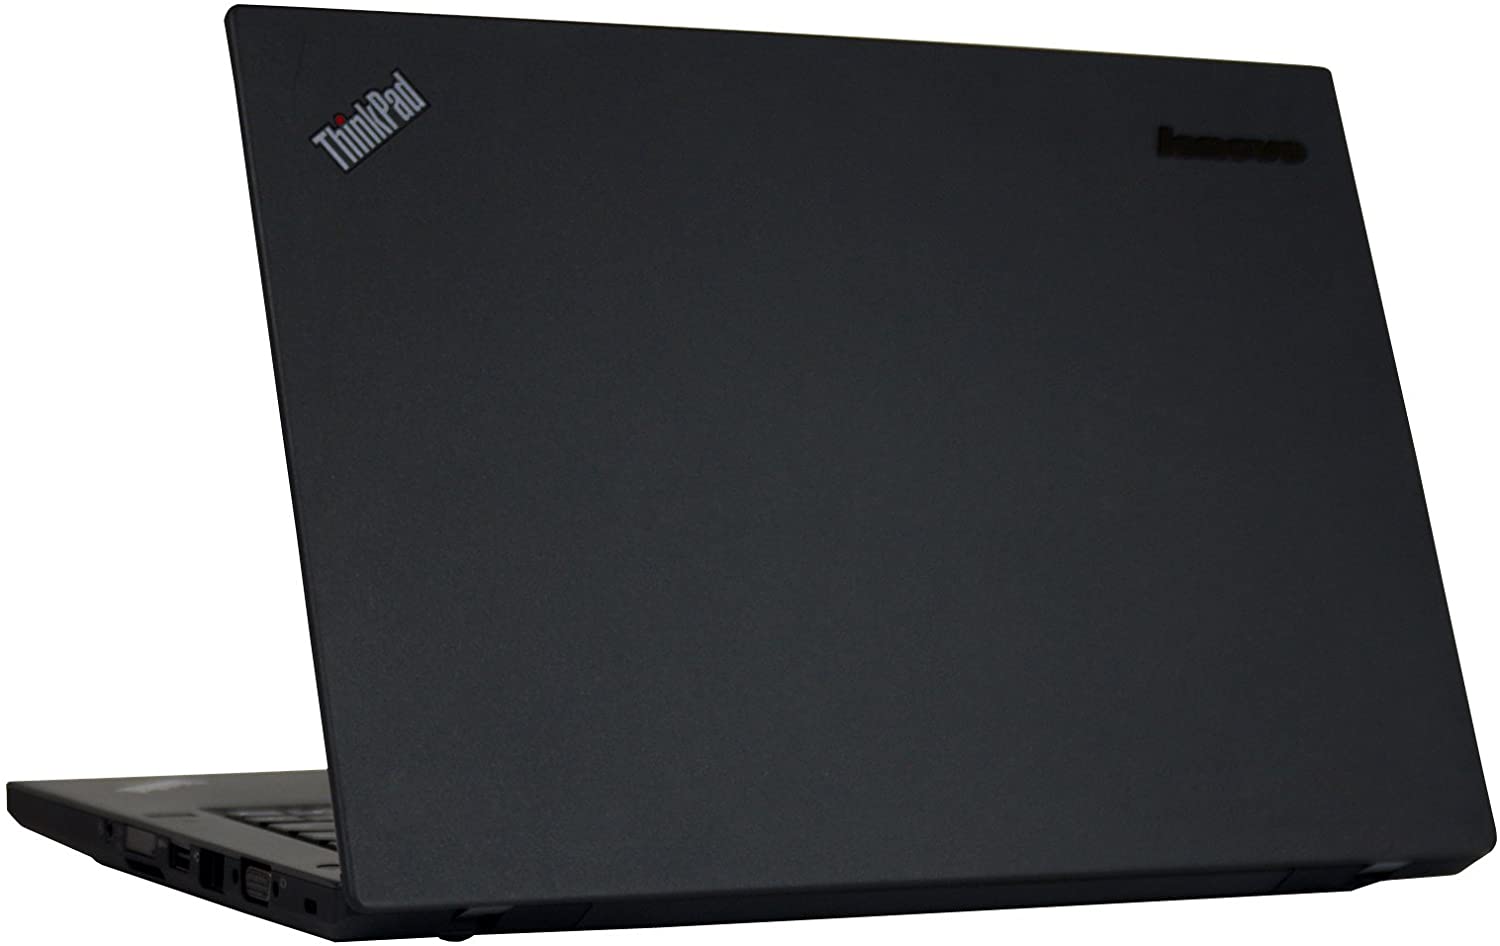  Refurbished Lenovo ThinkPad T450 Laptop